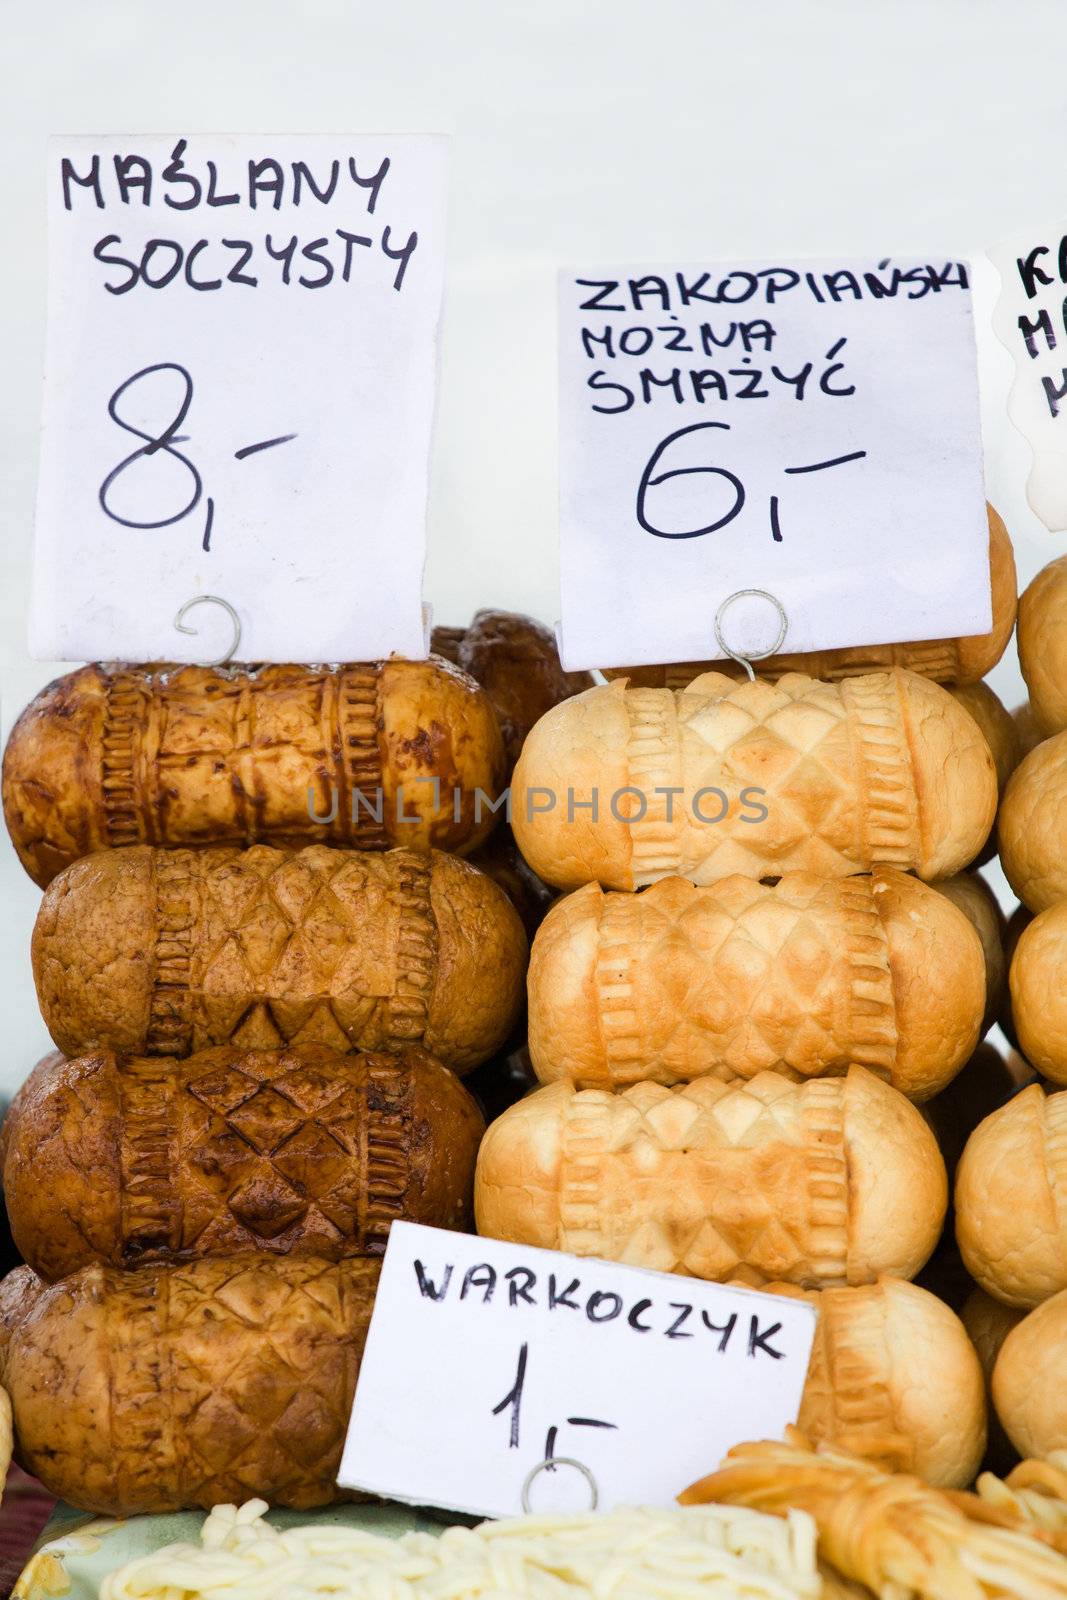 Homemade smoked polish cheese oscypki close-up on the craft market counter in Zakopane